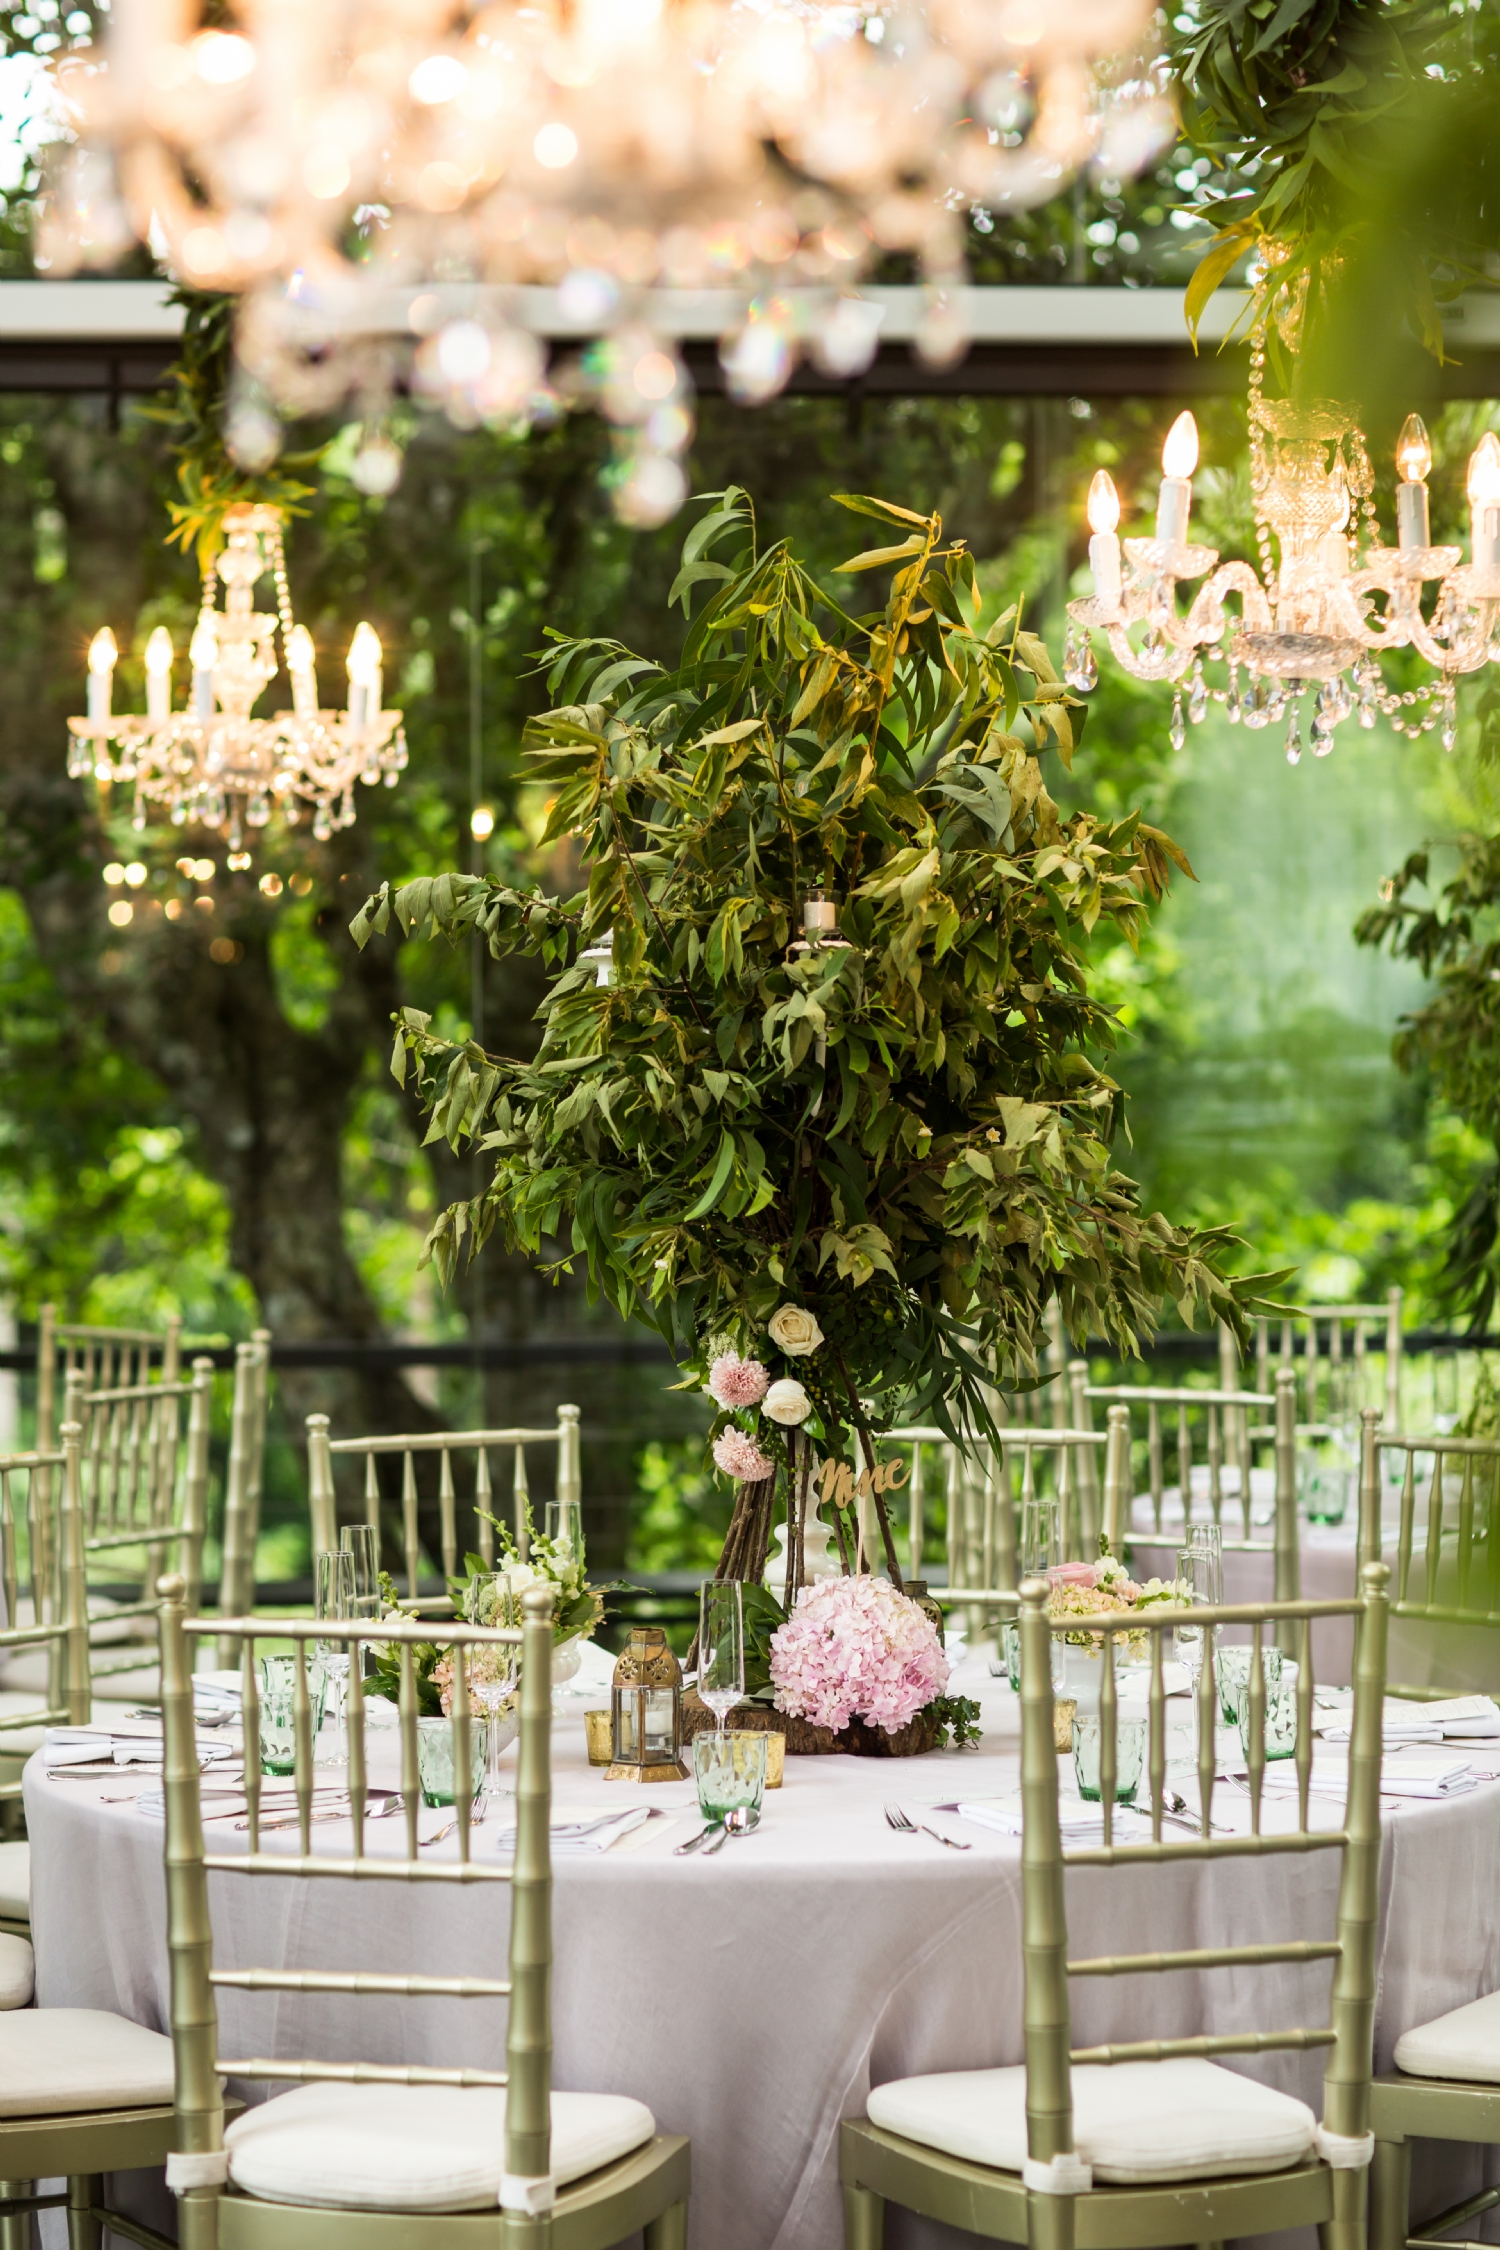 Michael & Yunita Enchanted Forest Wedding at The Glass House by Tirtha 4